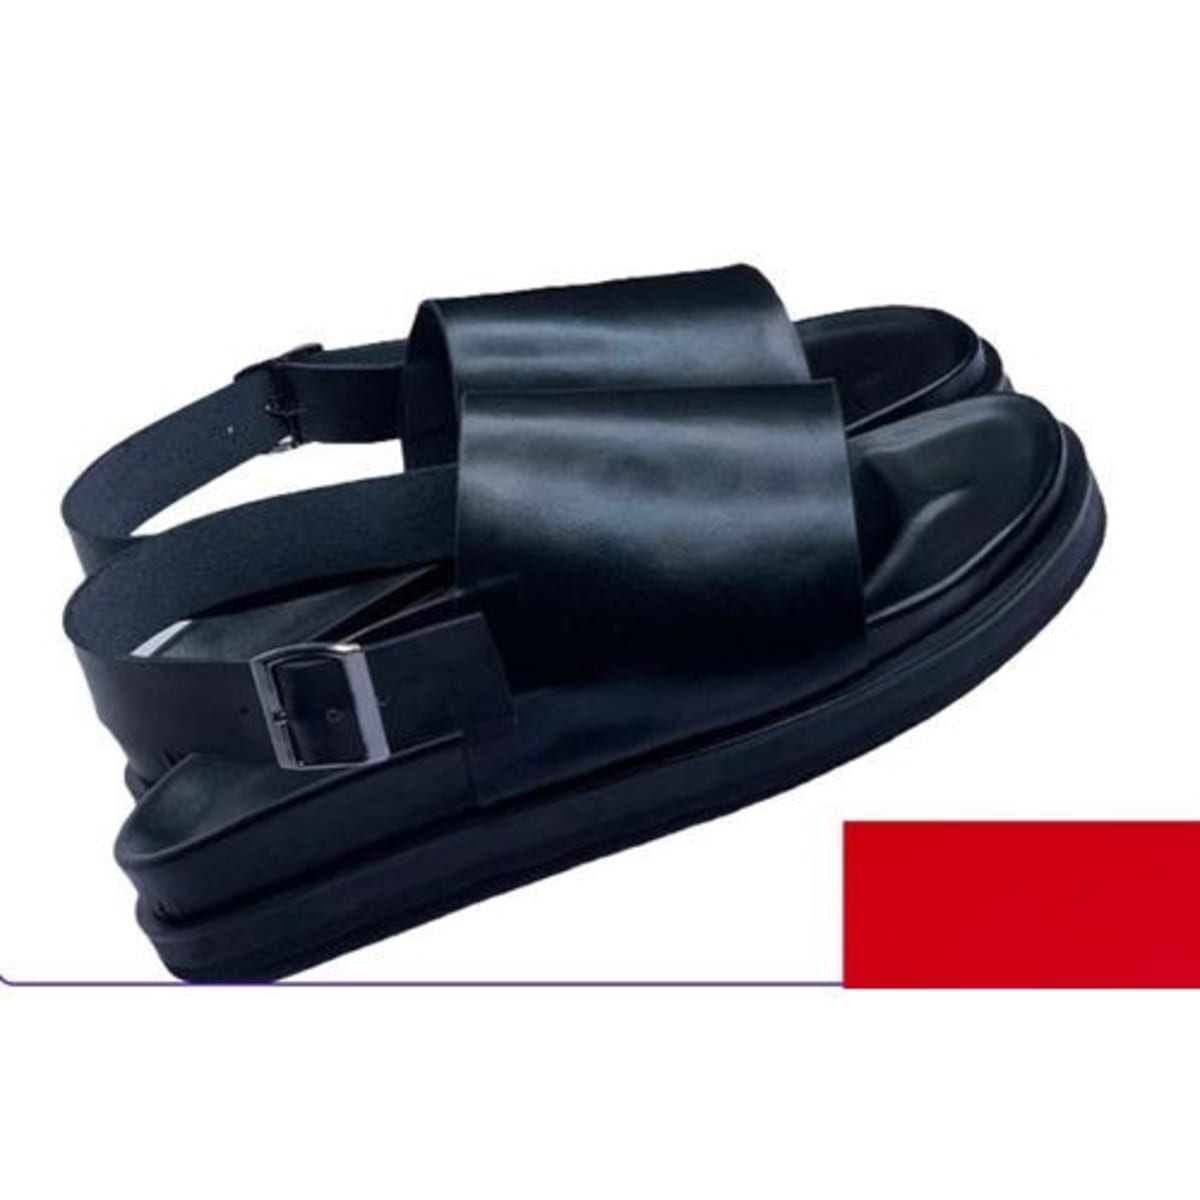 Bata mens Glance Sd Black Sandal - 7 UK (8616436) : Amazon.in: Fashion-hkpdtq2012.edu.vn